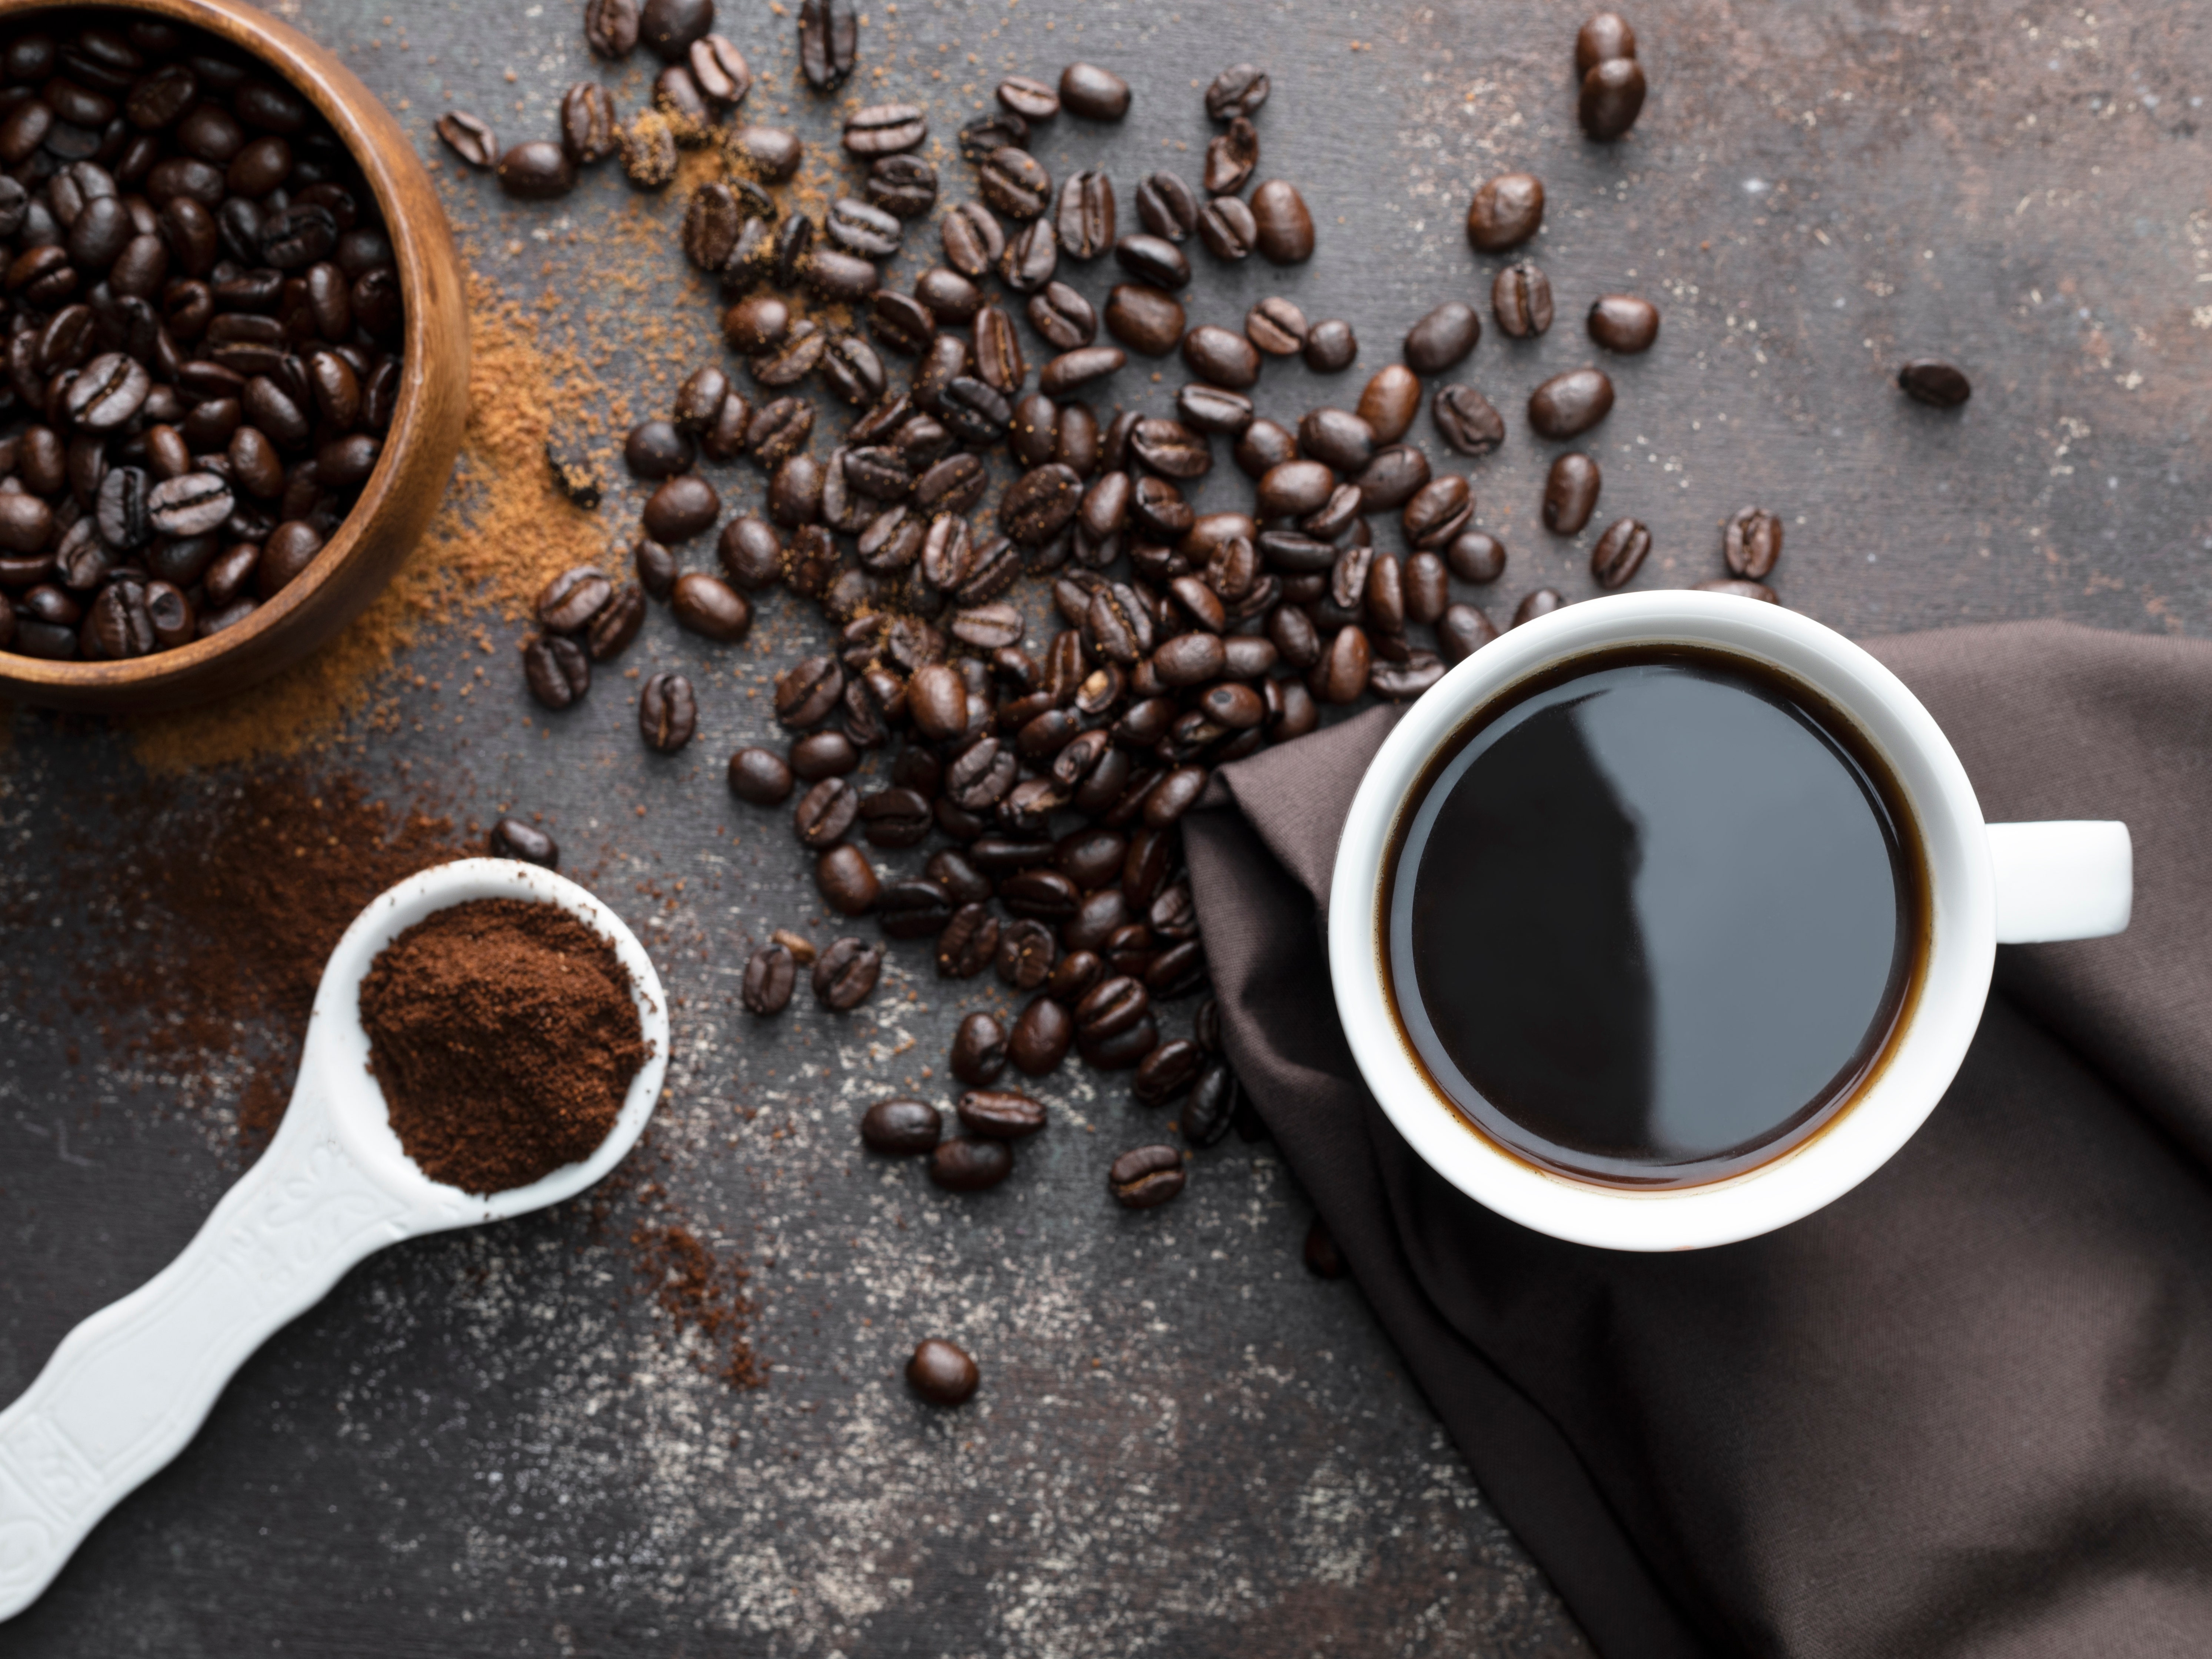 Reborn Coffee Seeks $40 Million IPO For Growth